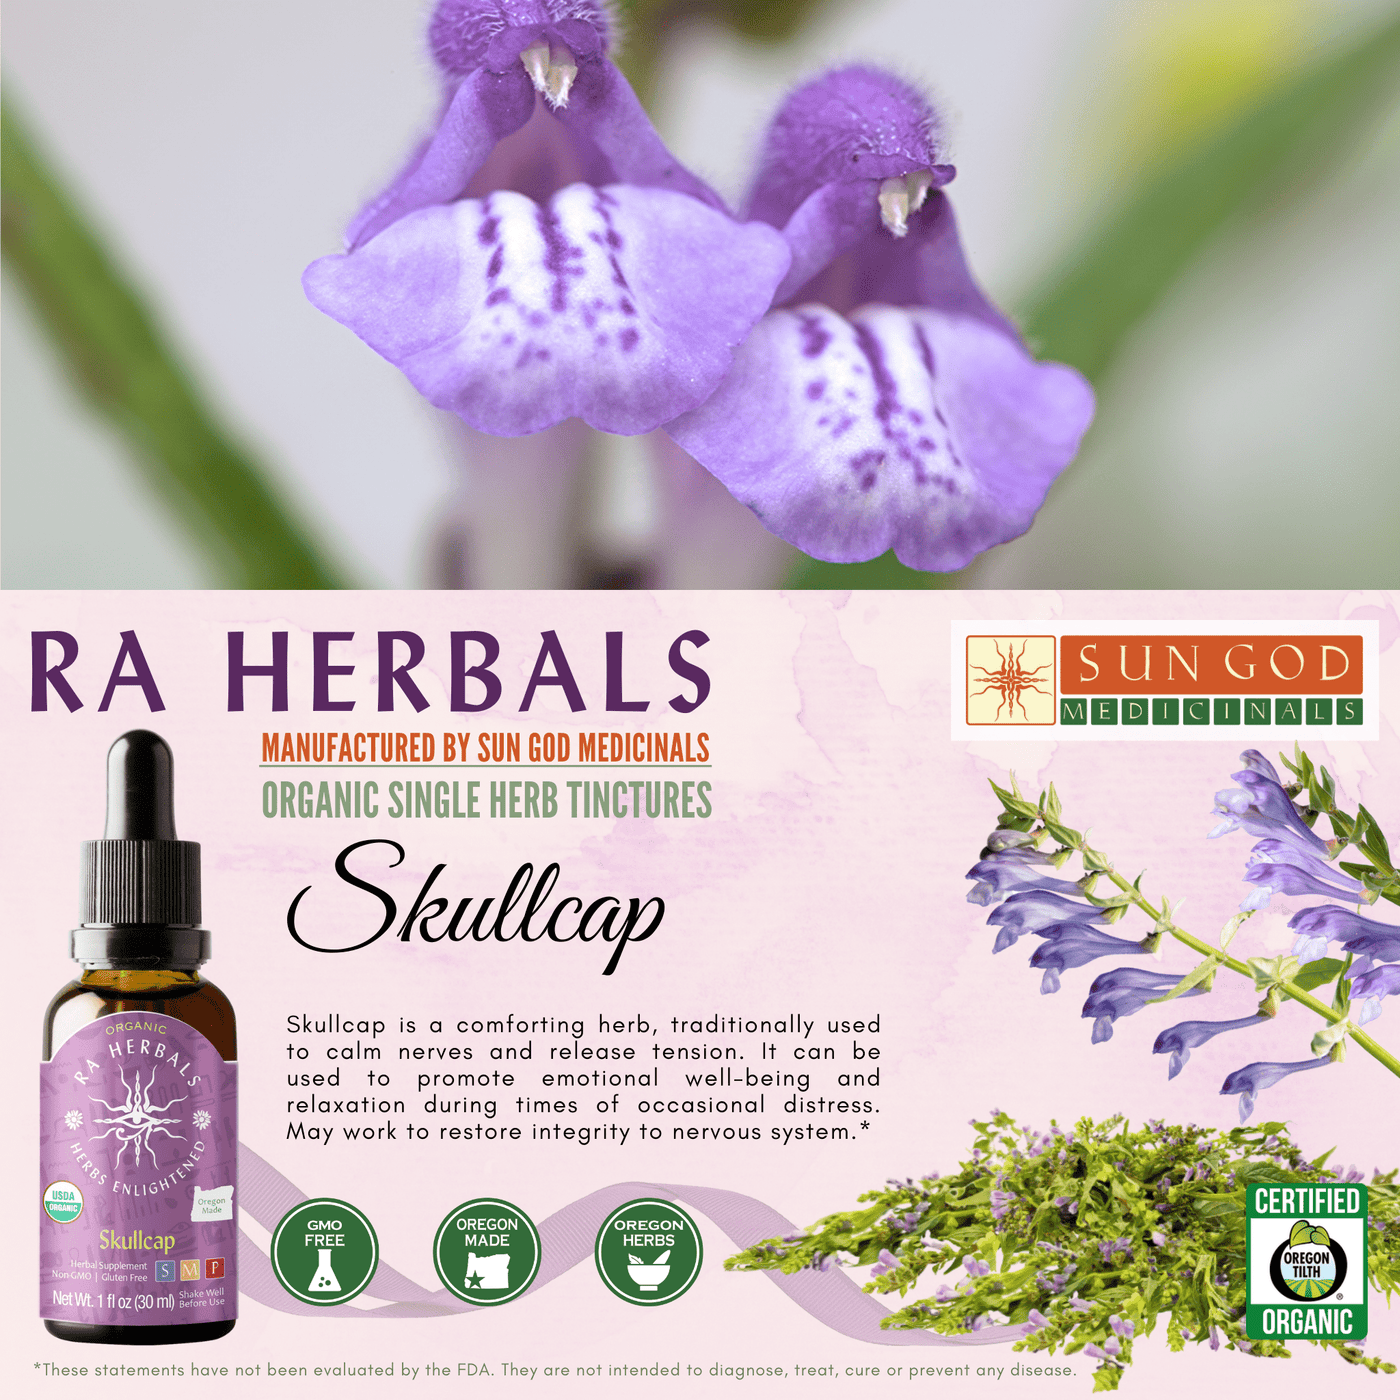 Ra Herbals Certified Organic Skullcap Tincture - Sun God Medicinals